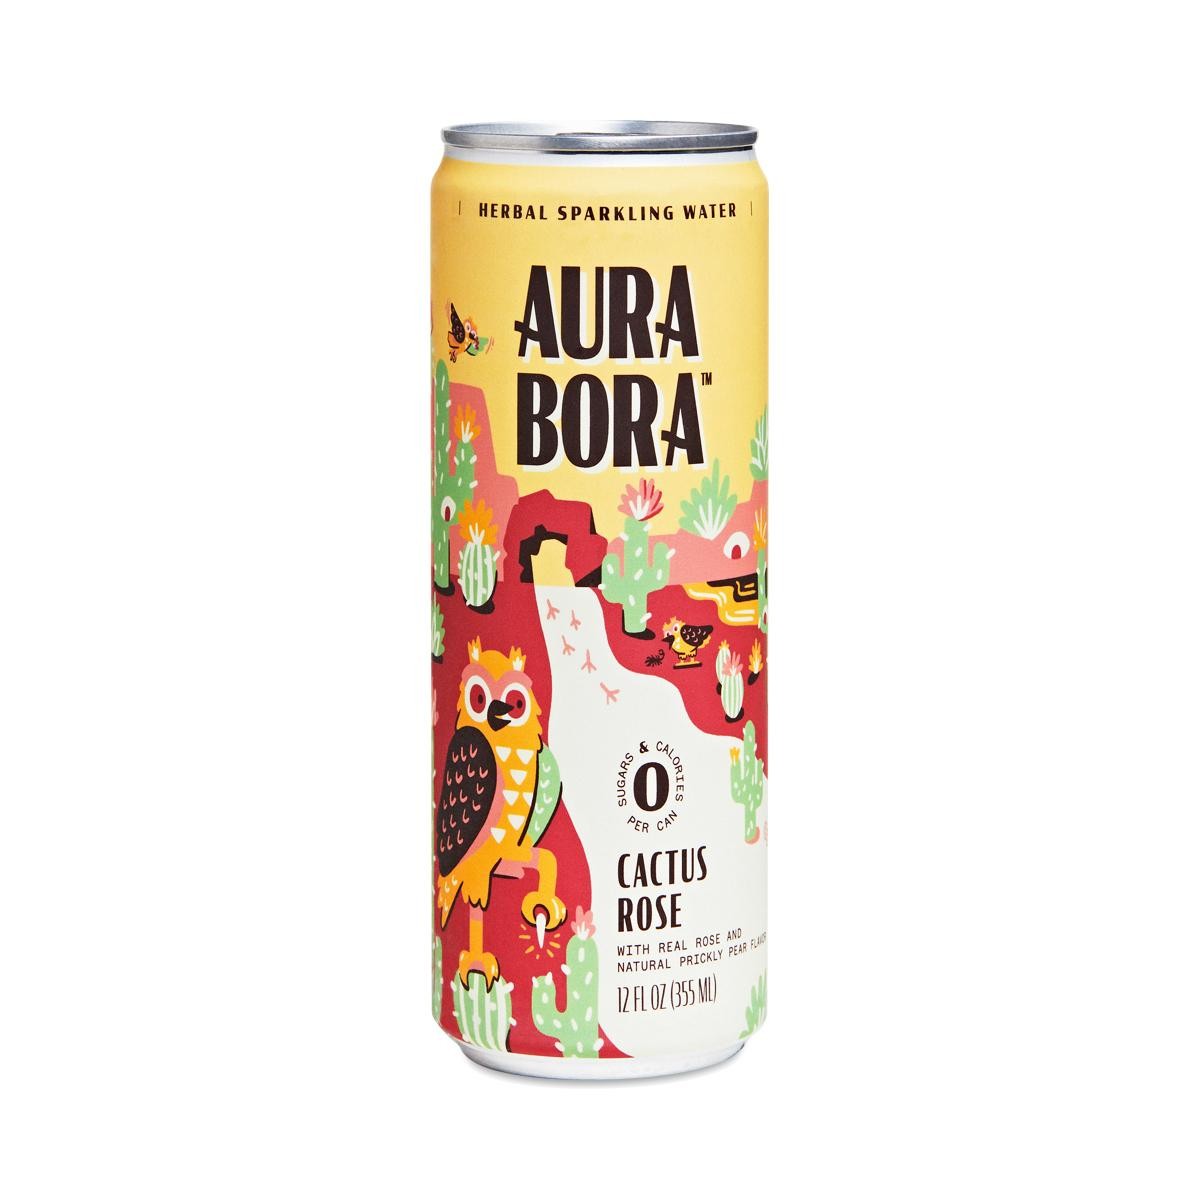 Aura Bora Cactus Rose Herbal Sparkling Water 12oz Can